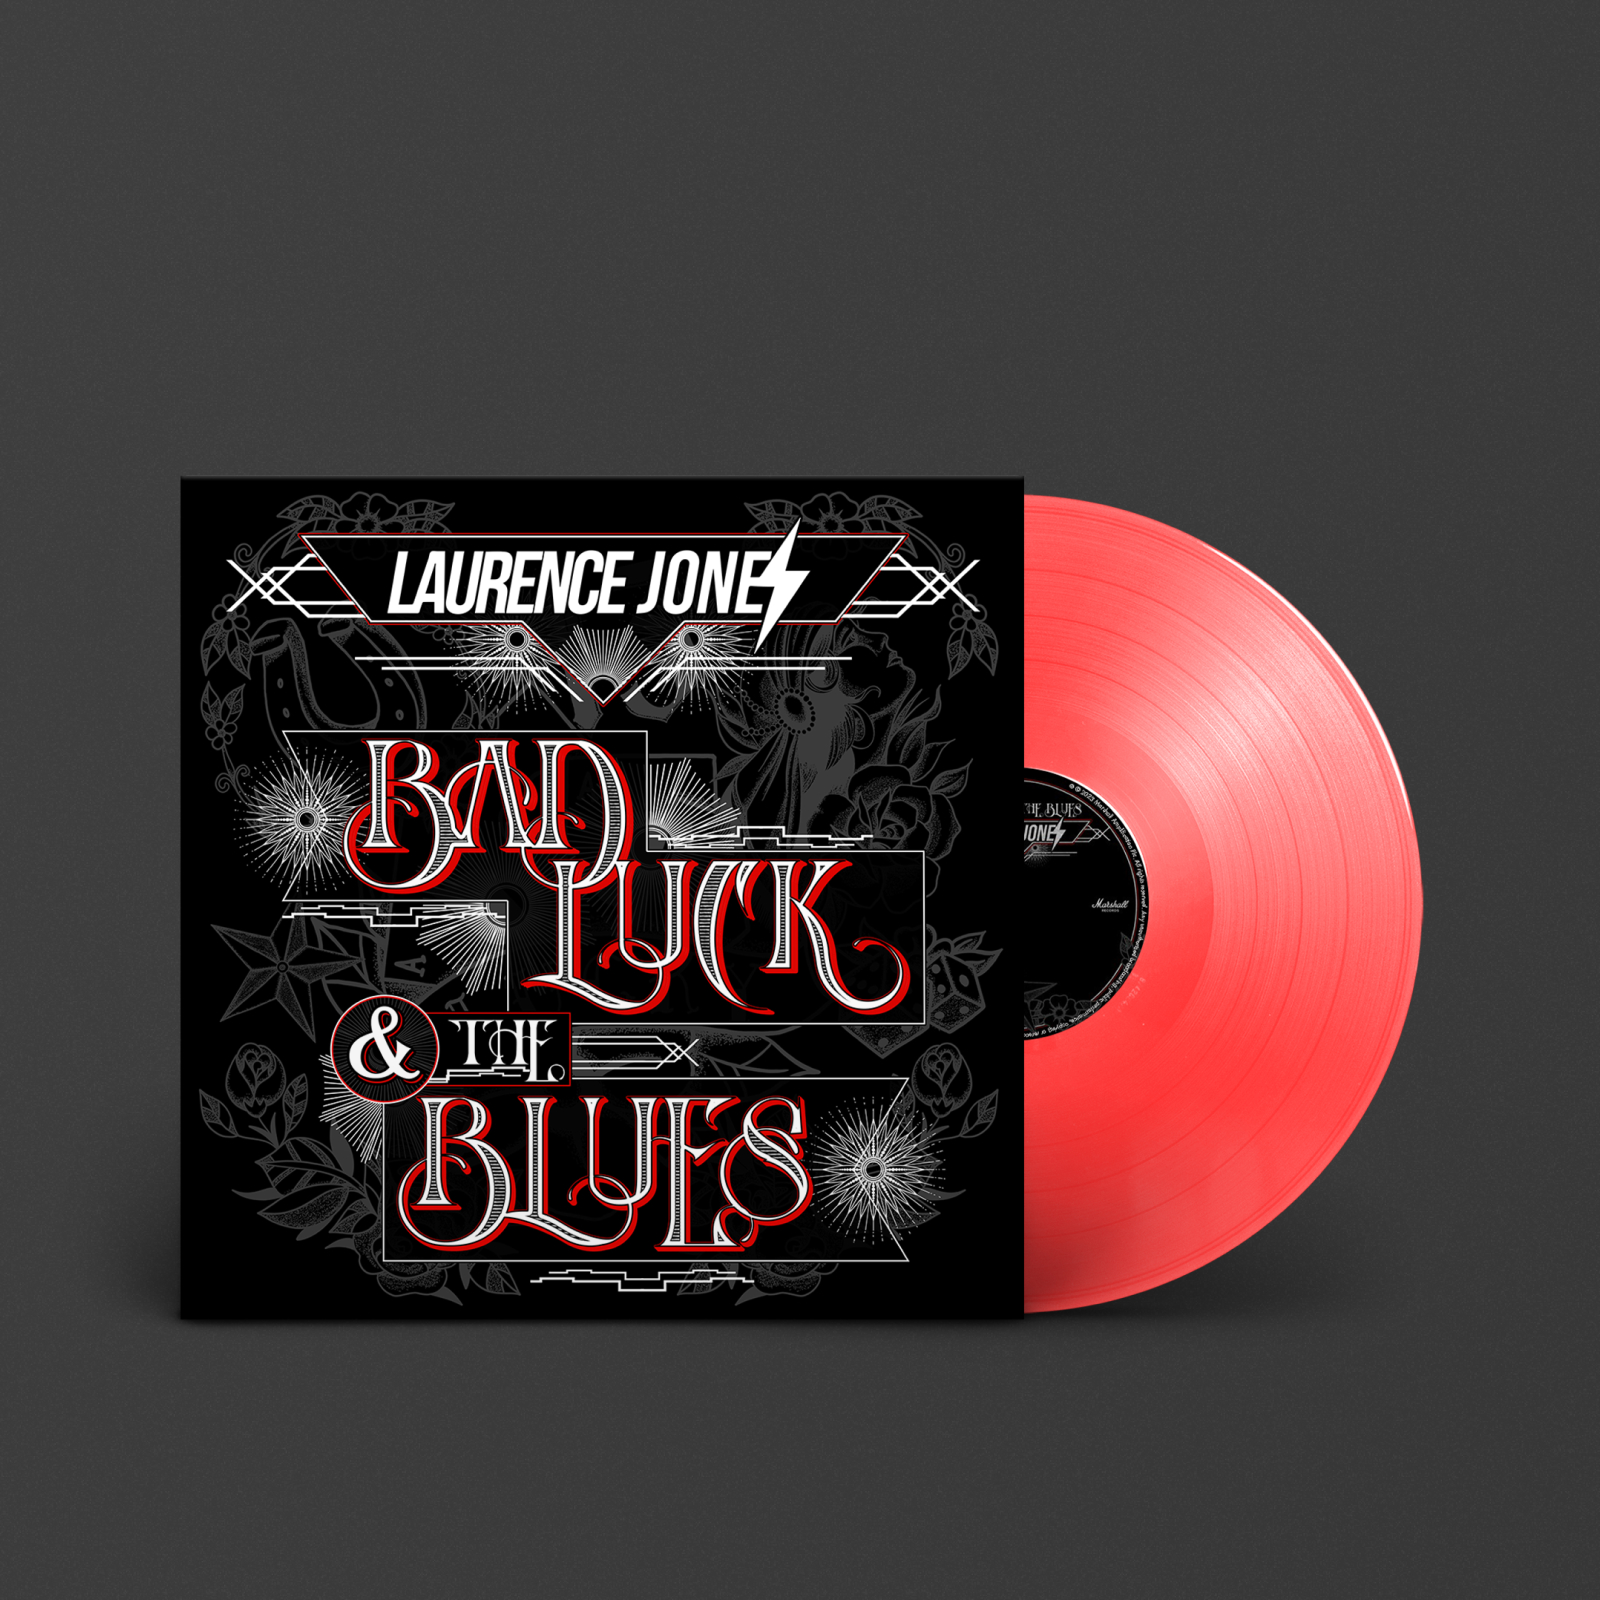 Disque vinyle rouge "Bad luck & the Blues" de "Laurence Jones".